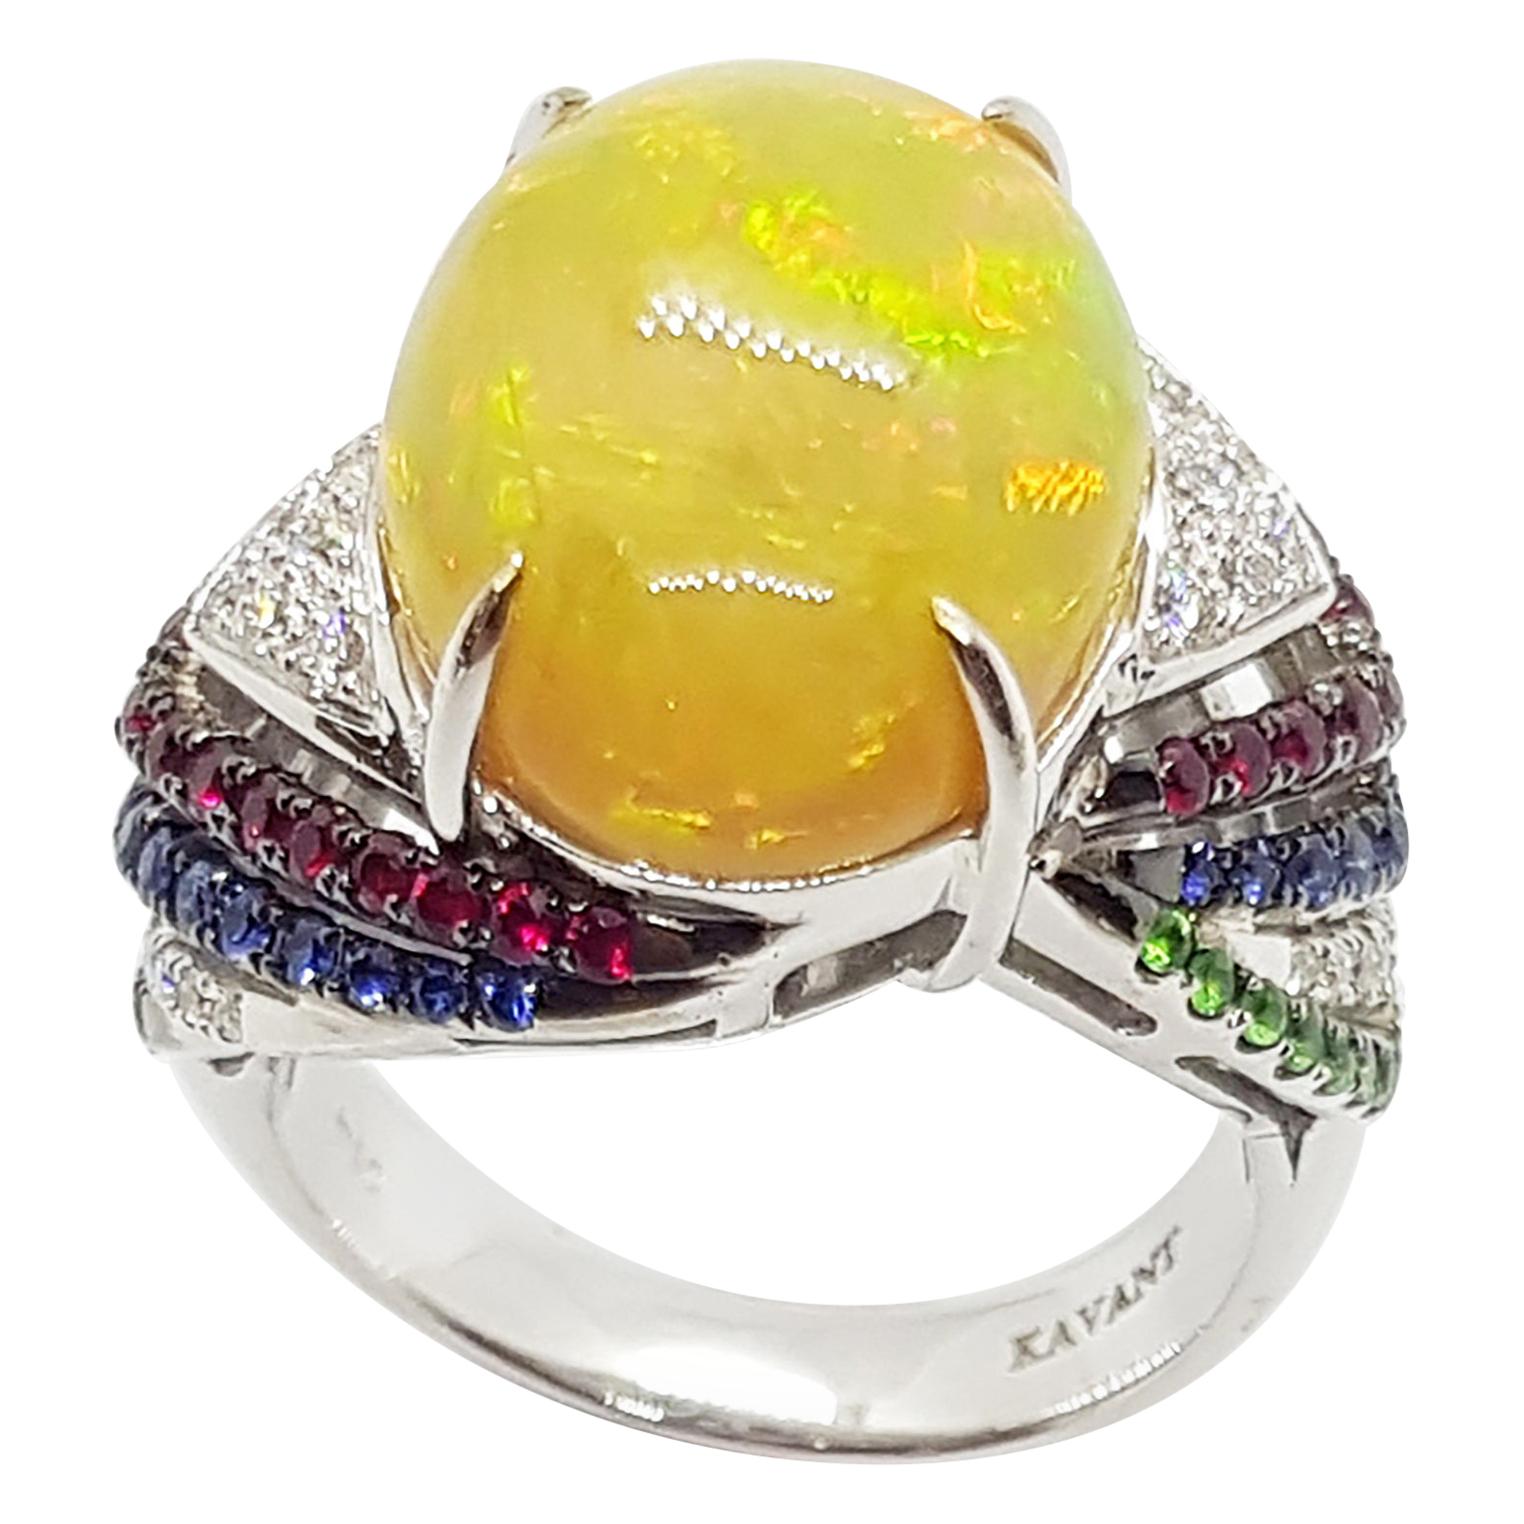 Opal, Tsavorite, Ruby, Blue Sapphire and Diamond Ring in 18 Karat White Gold